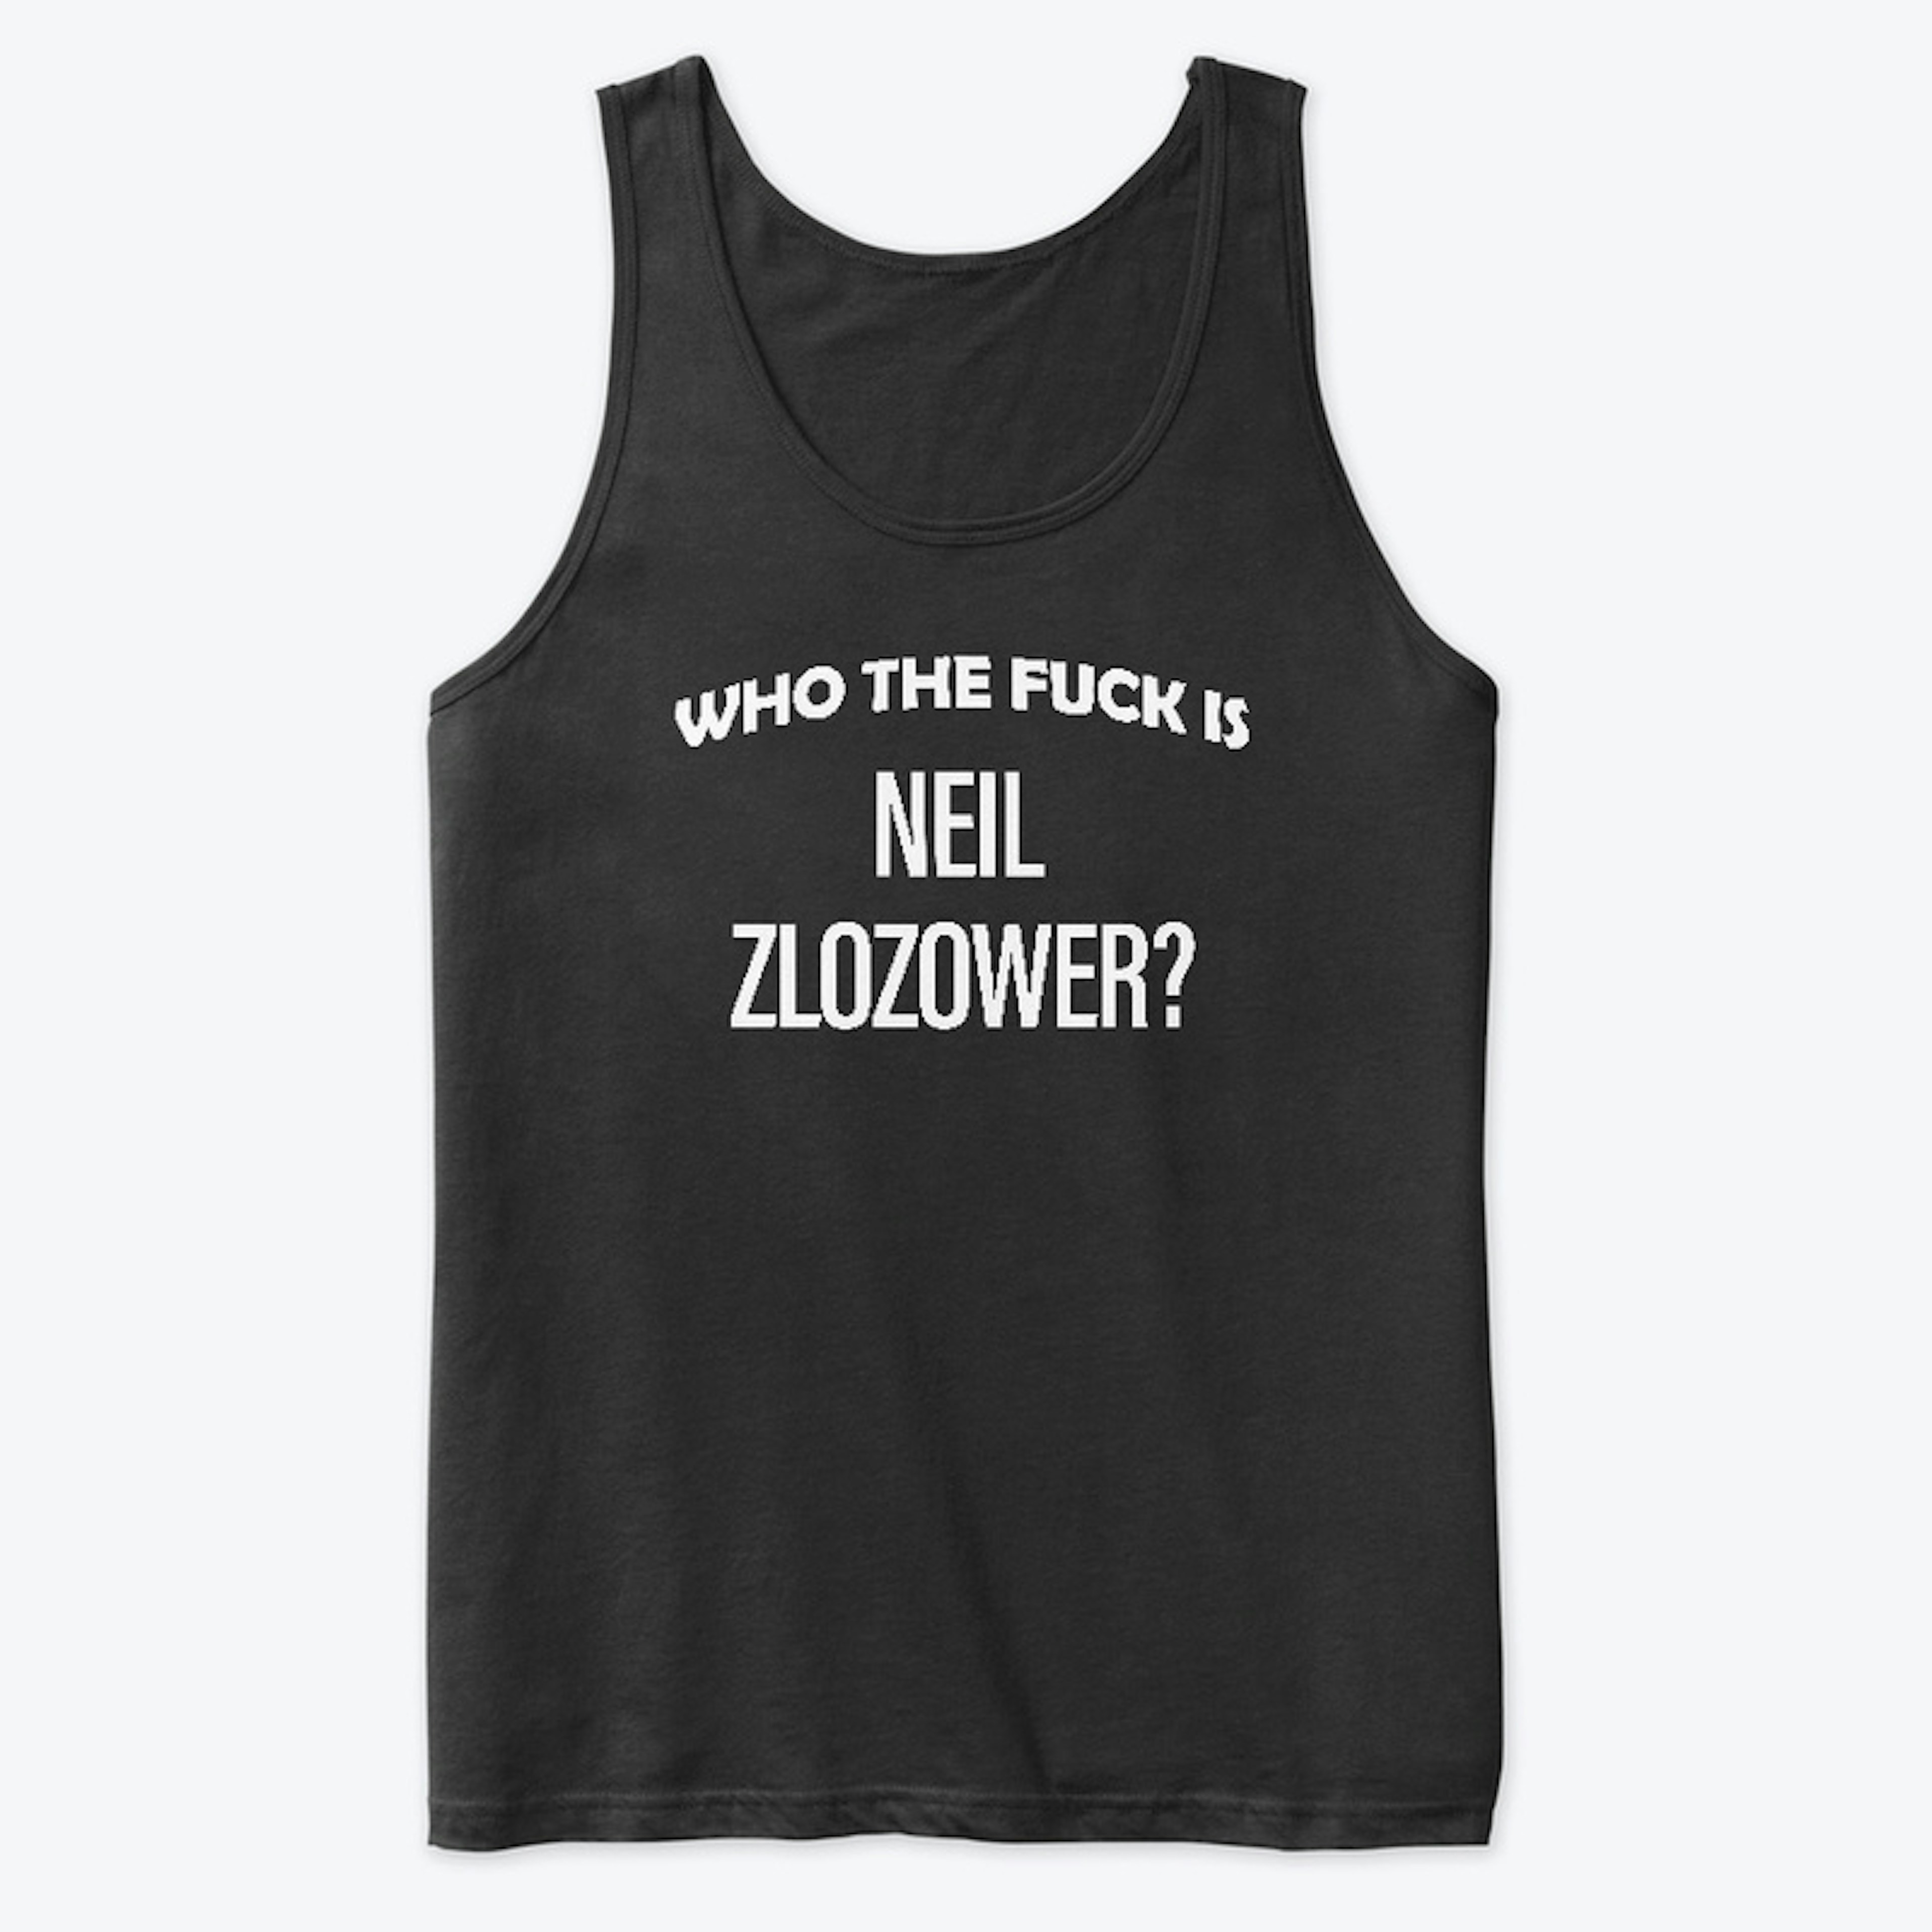 Who The Fuck Is Neil Zlozower?